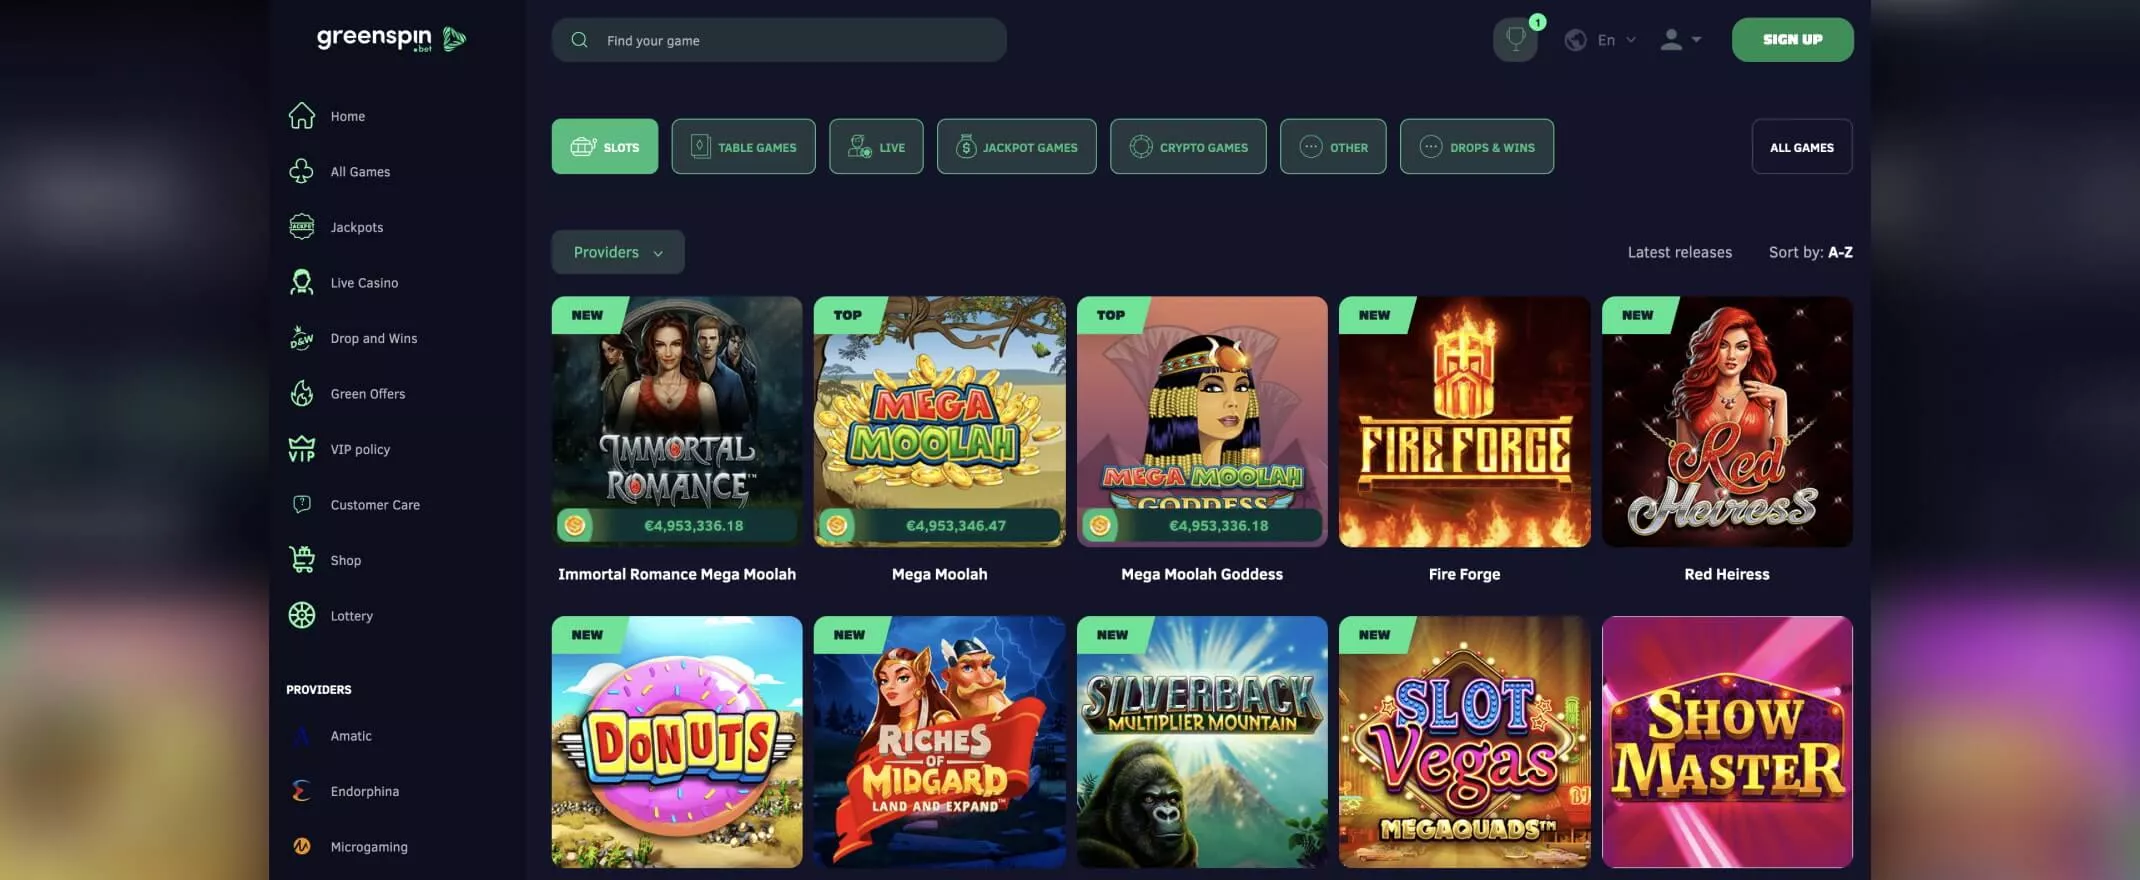 GreenSpins games screenshot